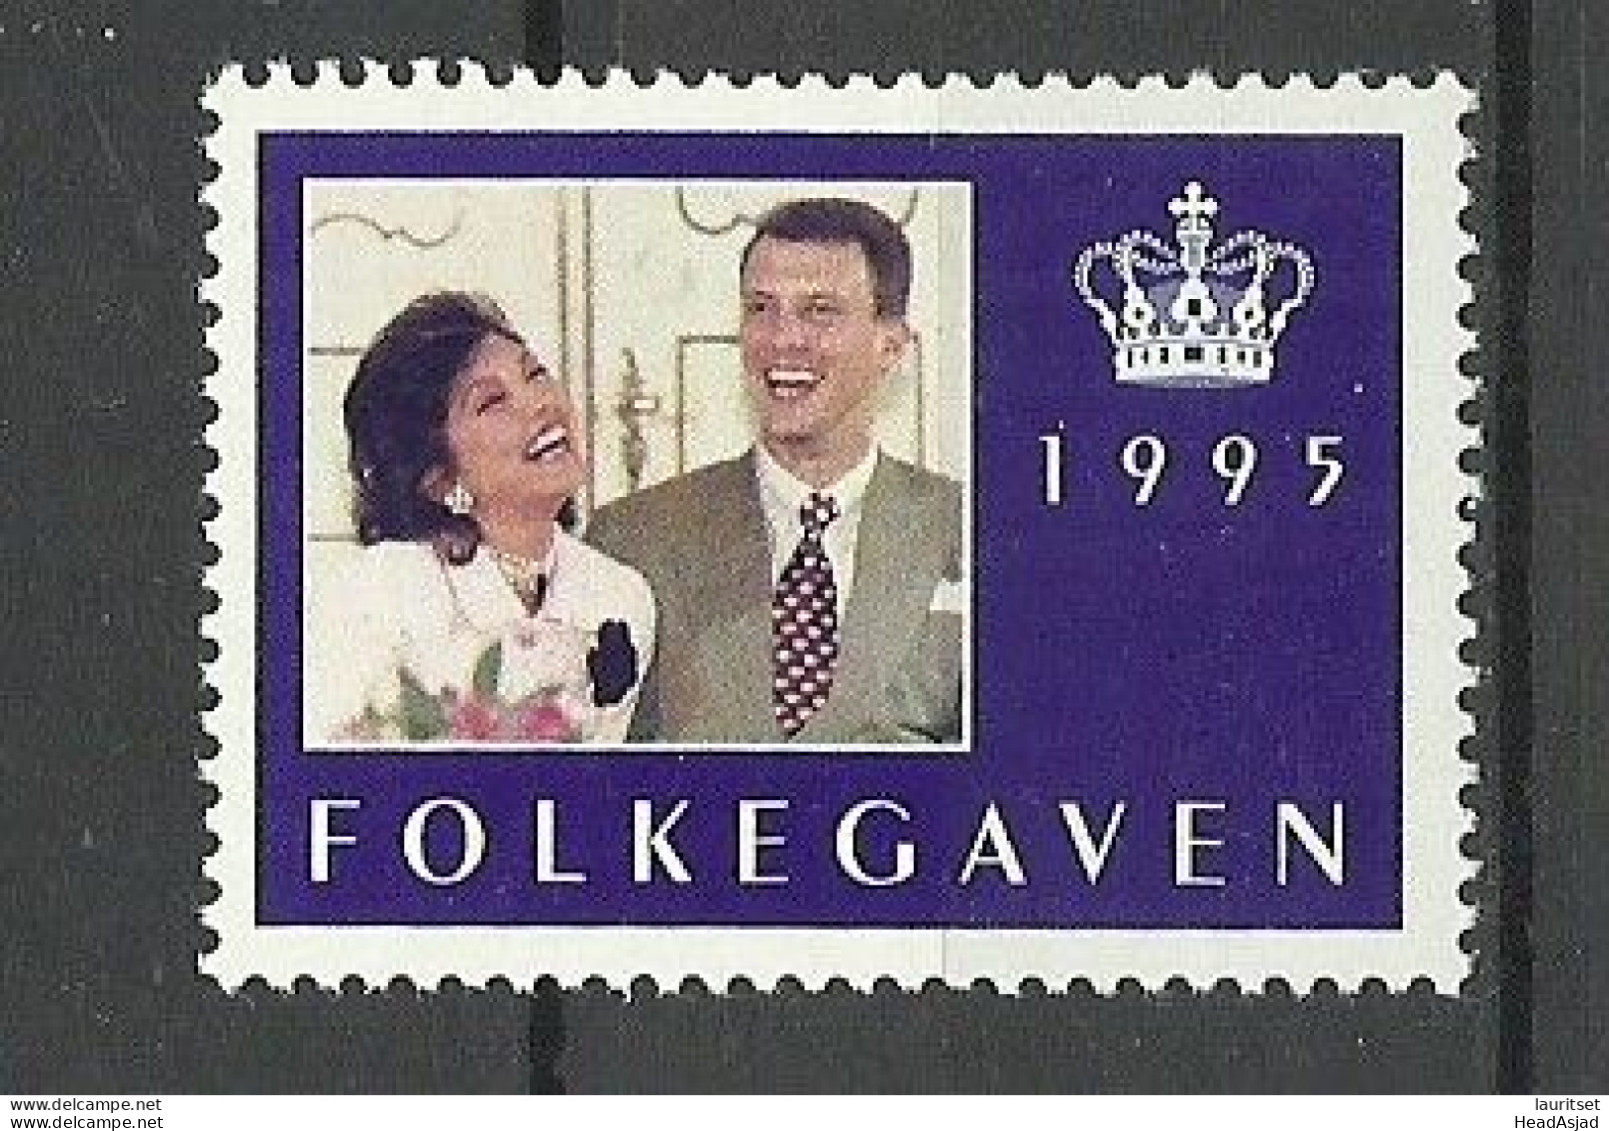 NORWAY 1995 Royal Pair MNH Vignette Poster Stamps Folkegaven - Royalties, Royals